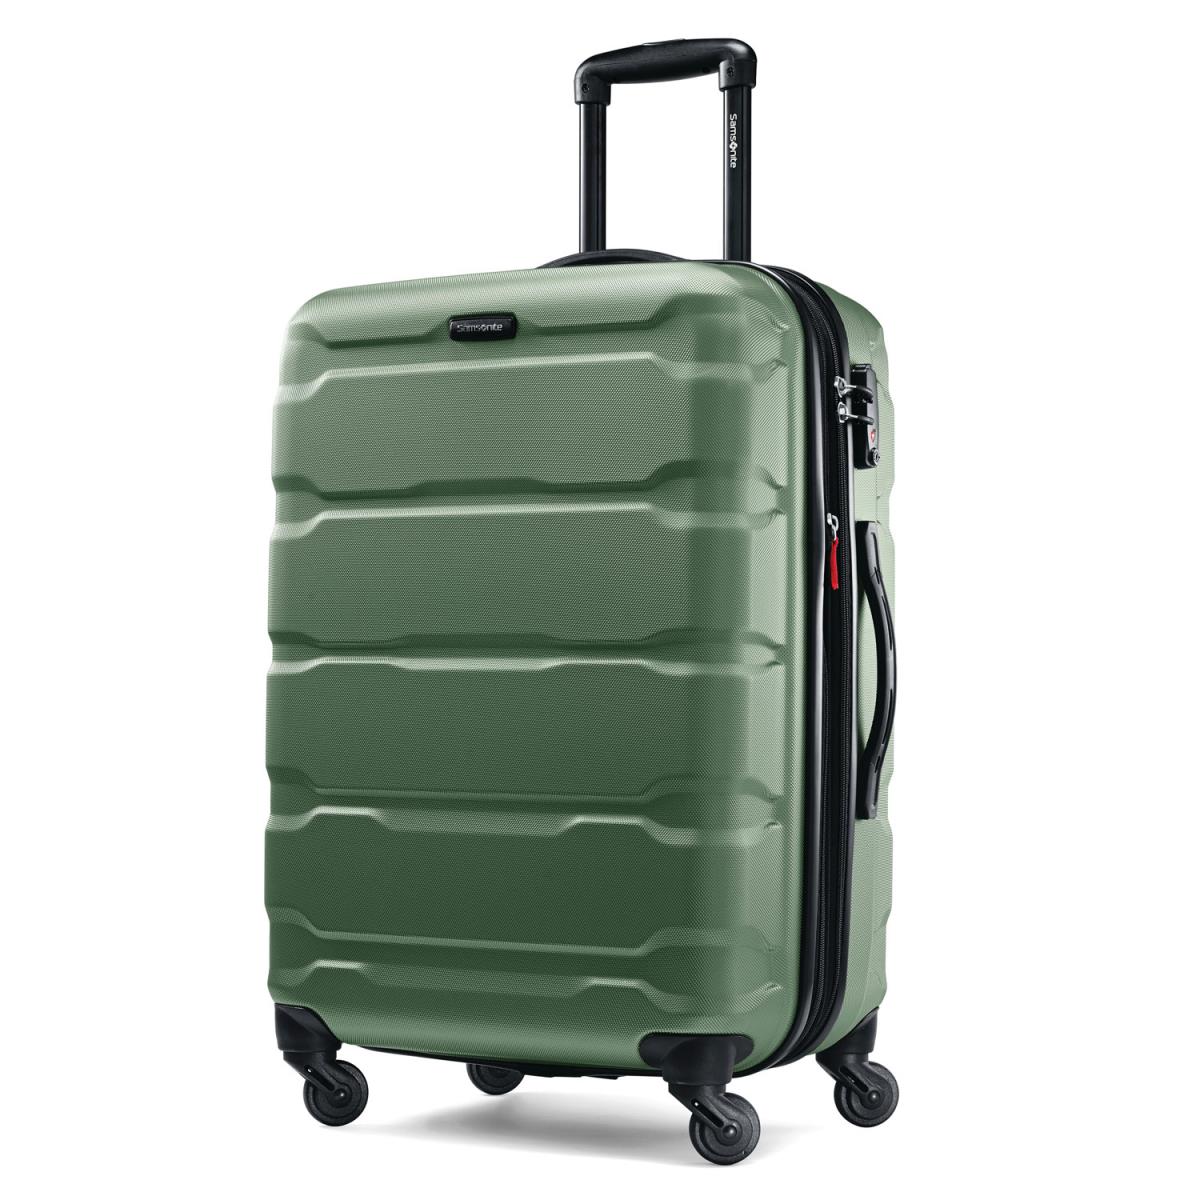 Samsonite Omni Hardside Spinner Suitcase Luggage Army Green - 20 / 24 / 28 24 inch (68309-2209)